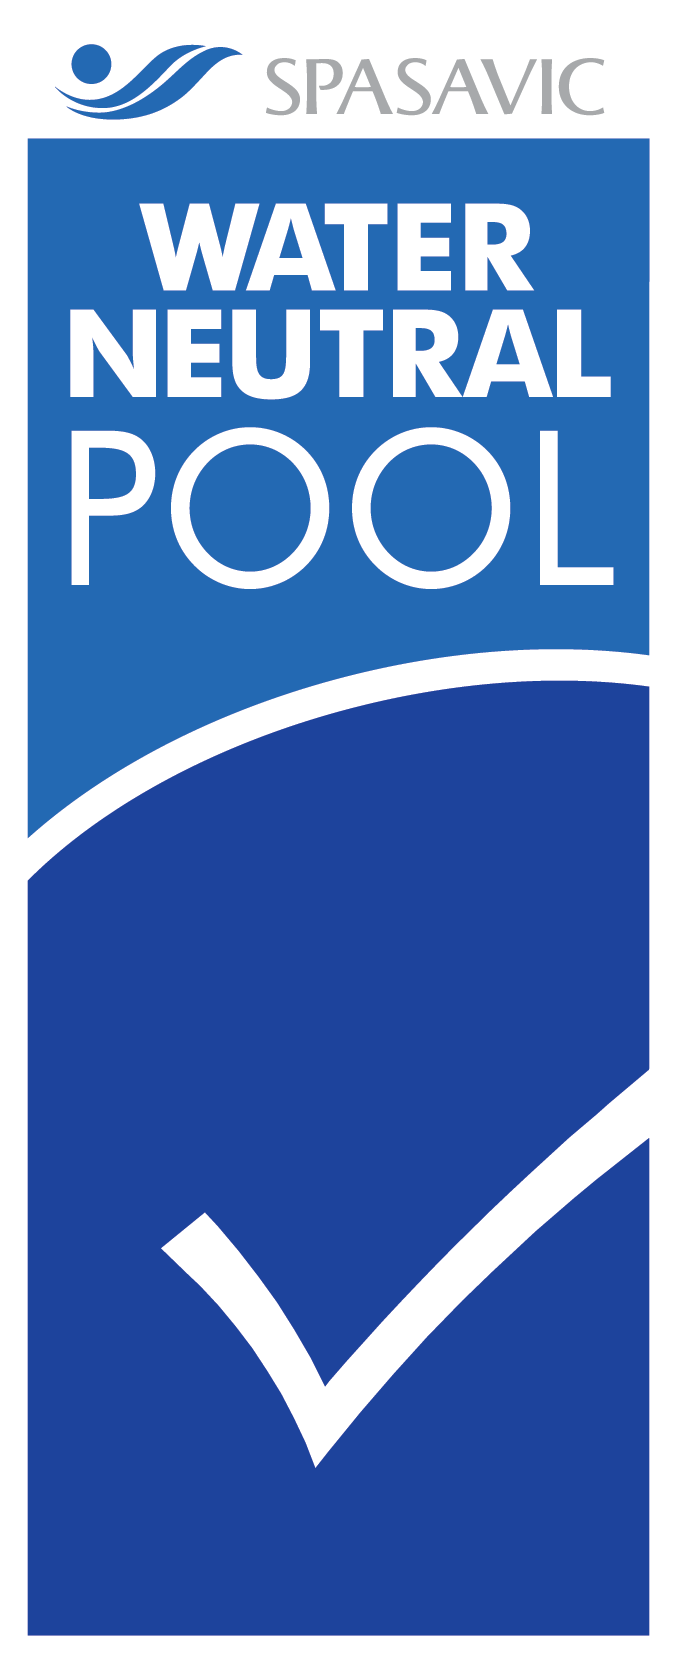 Water neutral logo 2019